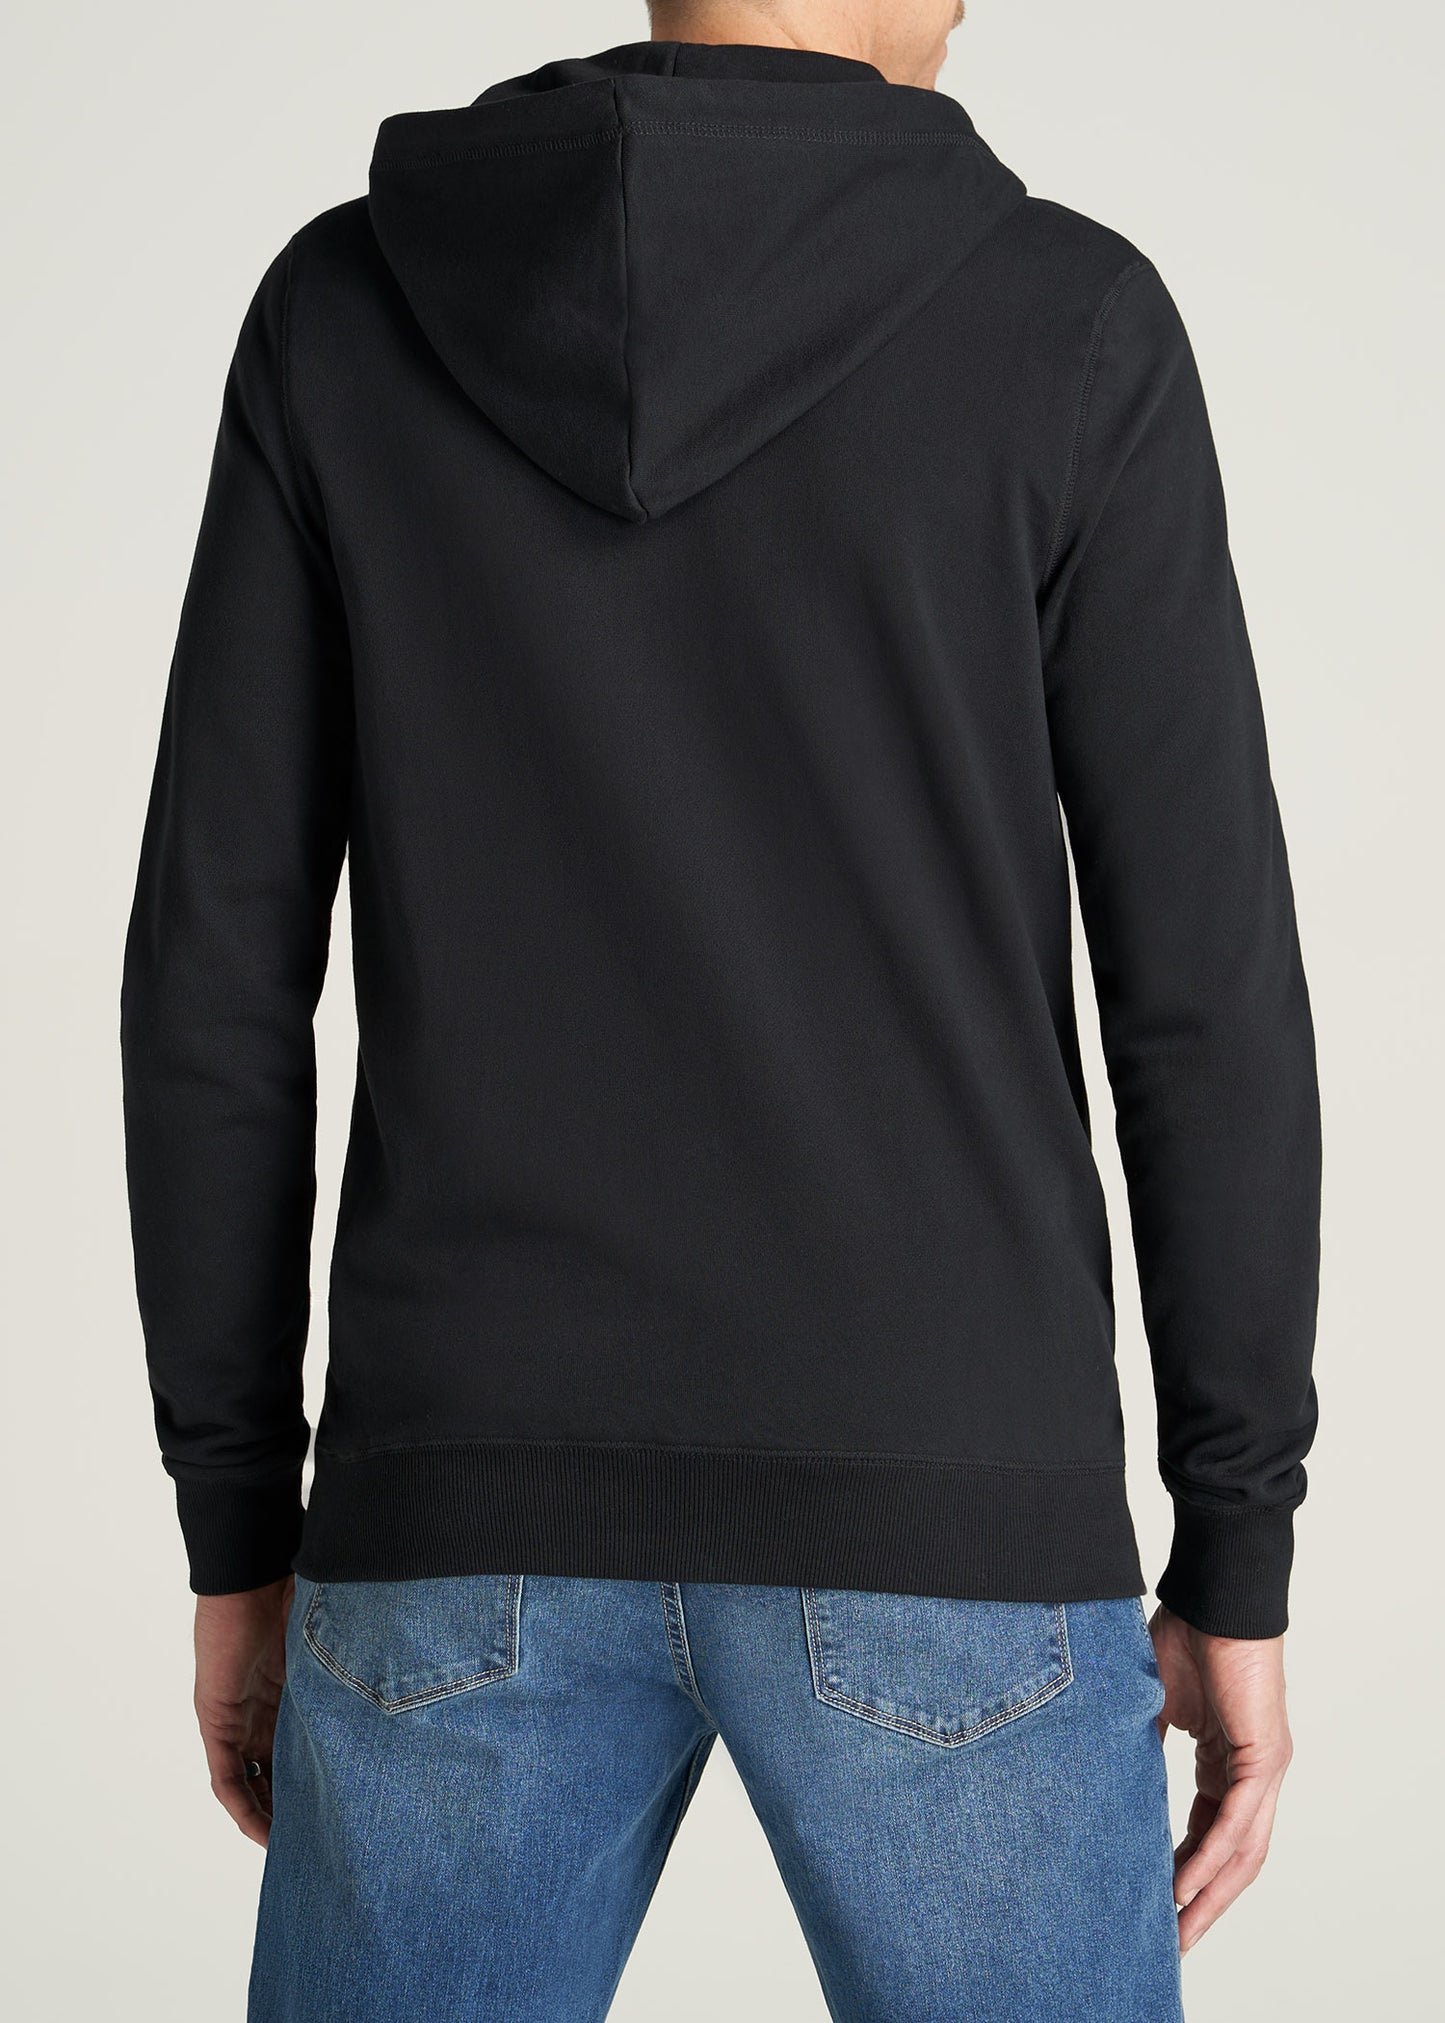  Men's Fashion Hoodies & Sweatshirts Men's Lightweight French  Terry Full-Zip Hooded Sweatshirt 15vdv Black : Clothing, Shoes & Jewelry